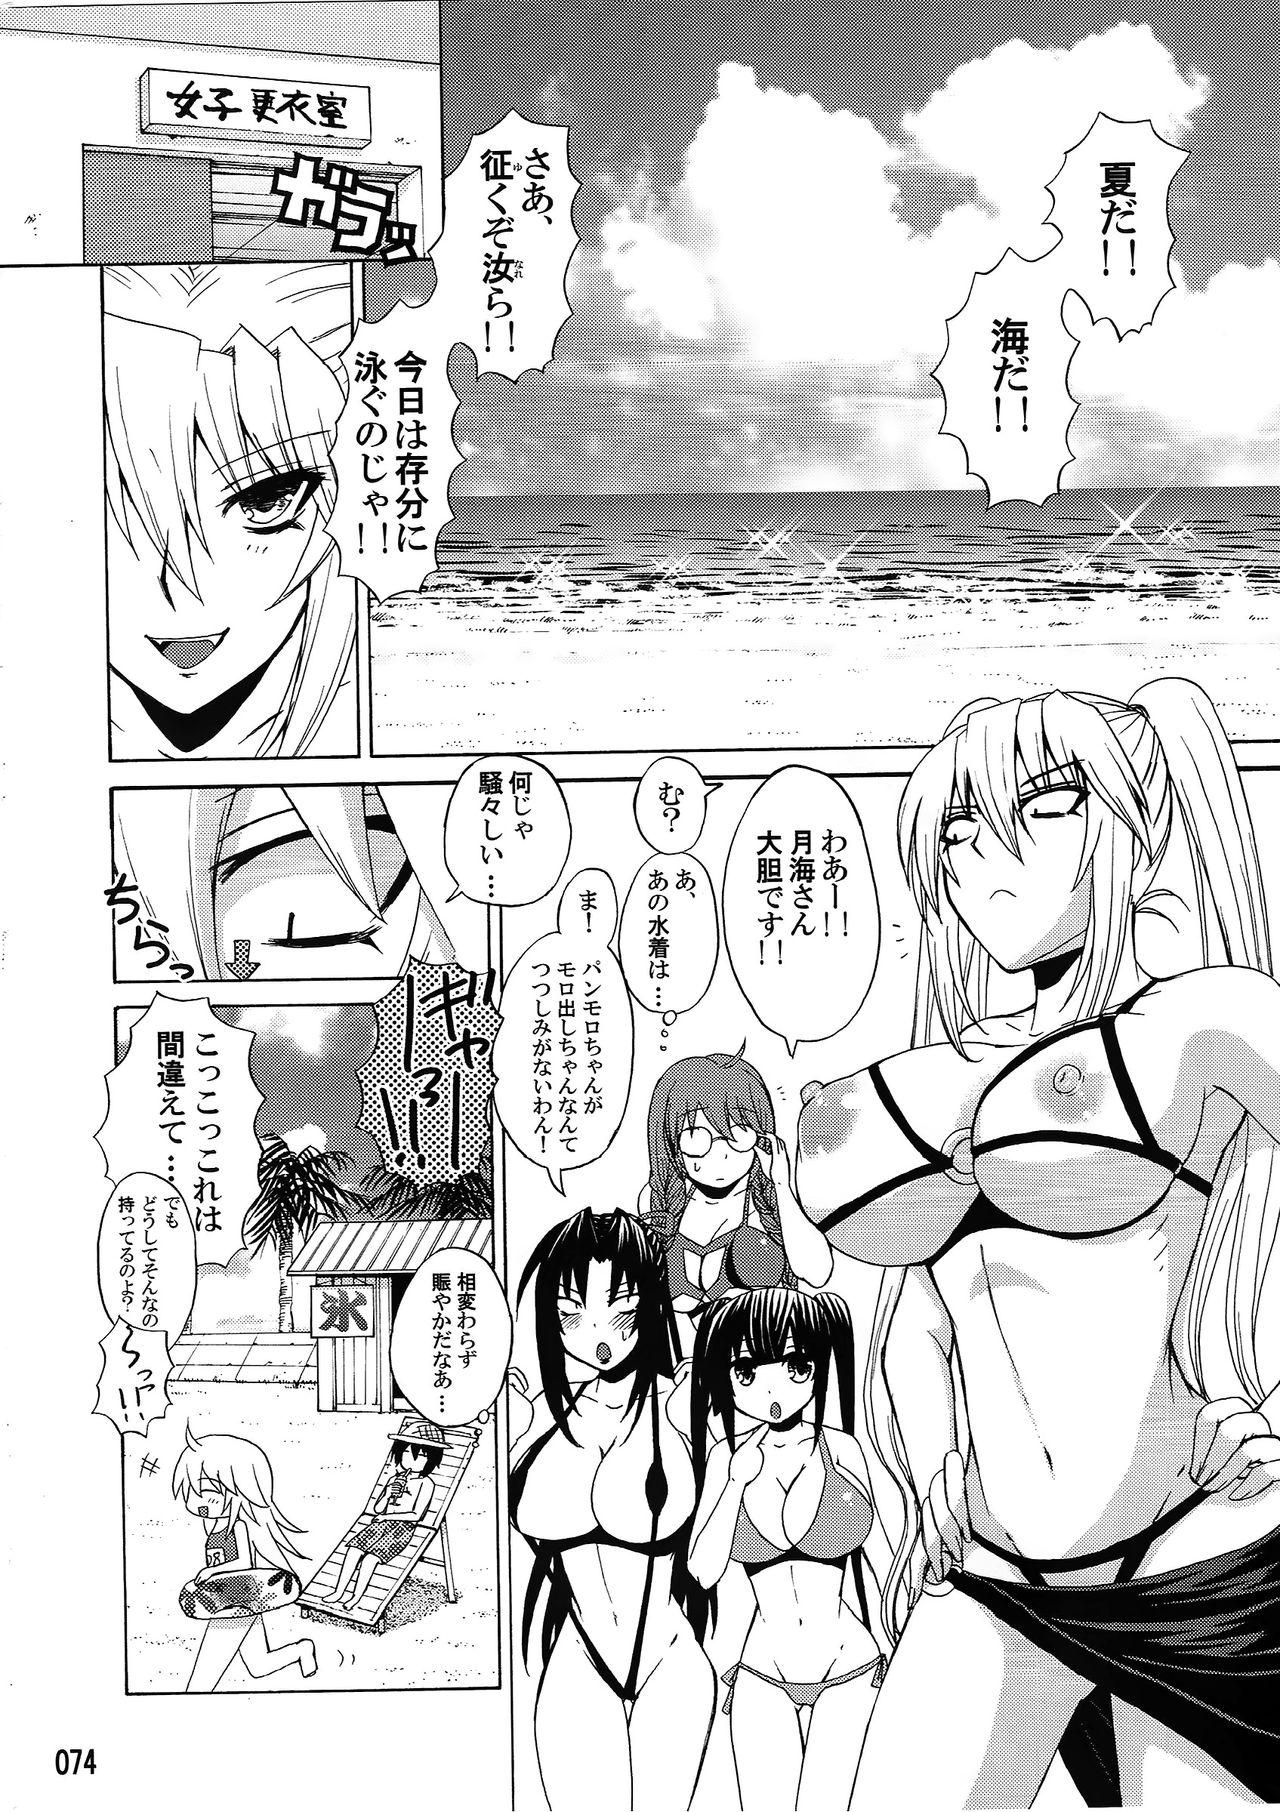 Sekirei threesome manga